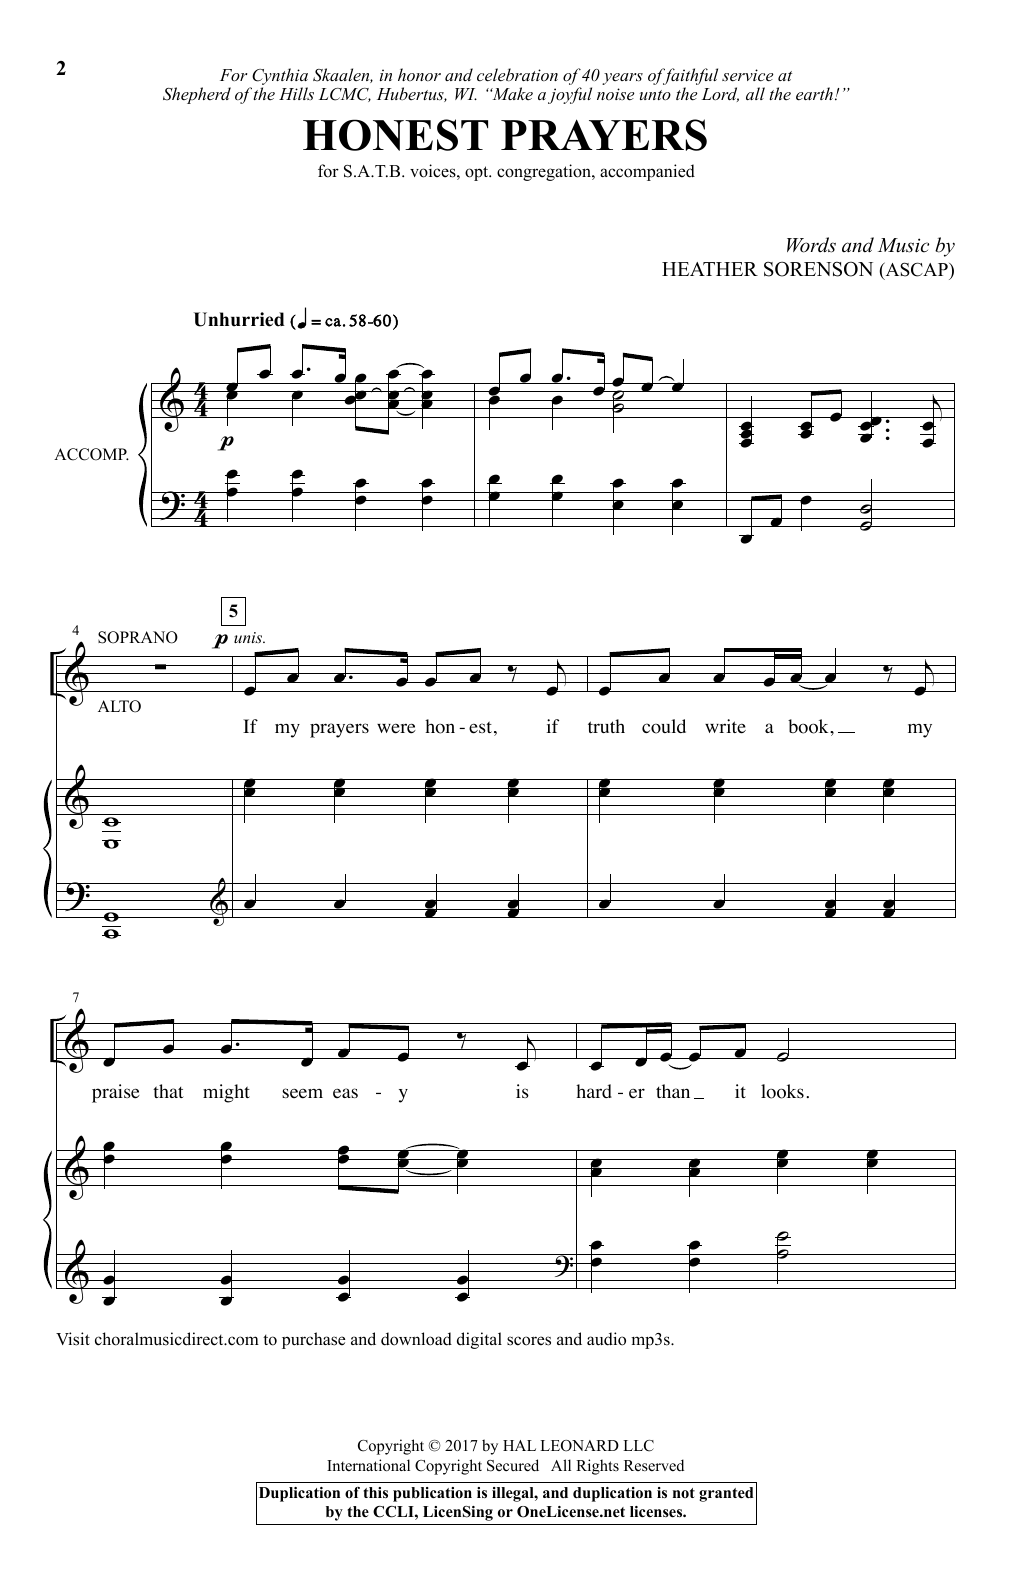 Heather Sorenson Honest Prayers Sheet Music Notes & Chords for SATB - Download or Print PDF